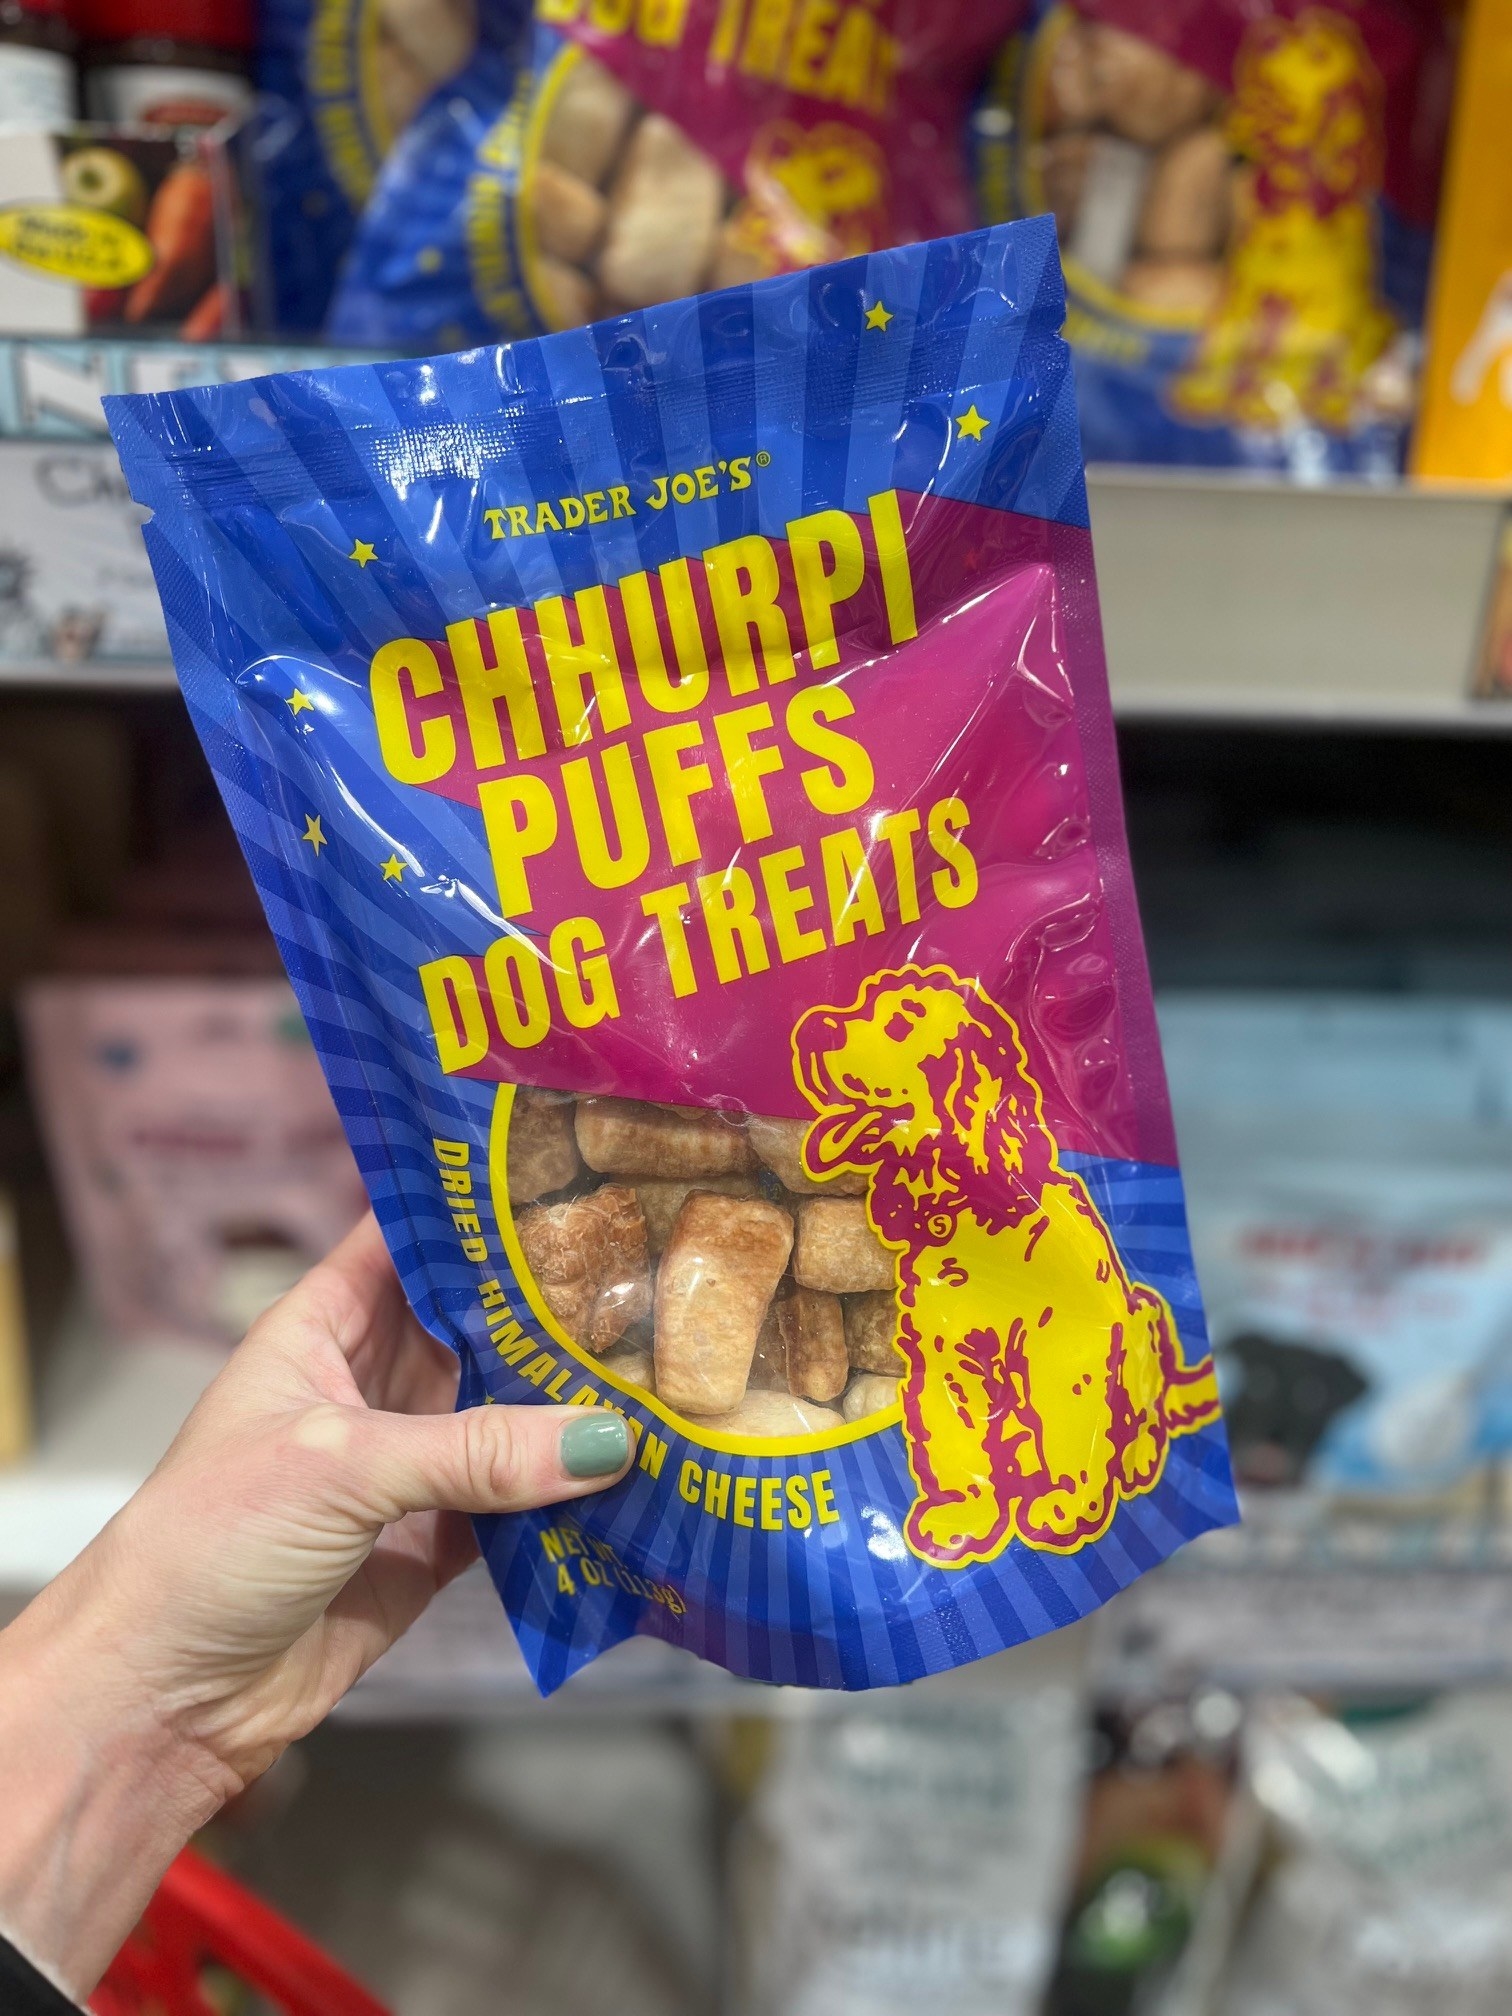 Chhurpi Puffs Dog Treats